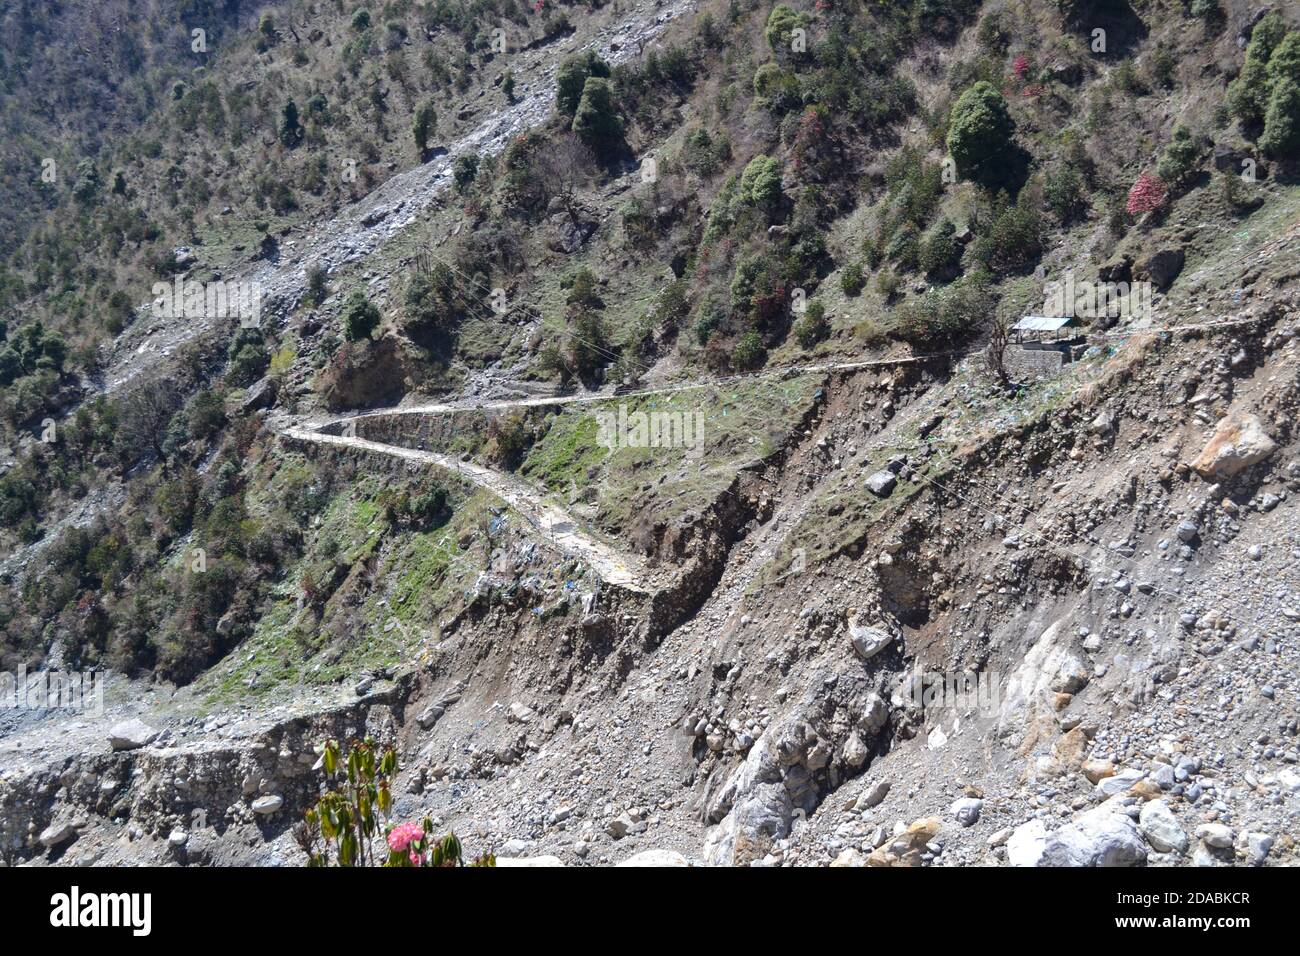 Kedarnath temple trek damaged in disaster 16 June 2013. In June 2013, a multi-day cloudburst centered on the North Indian state of Uttarakhand caused devastating floods. Stock Photo